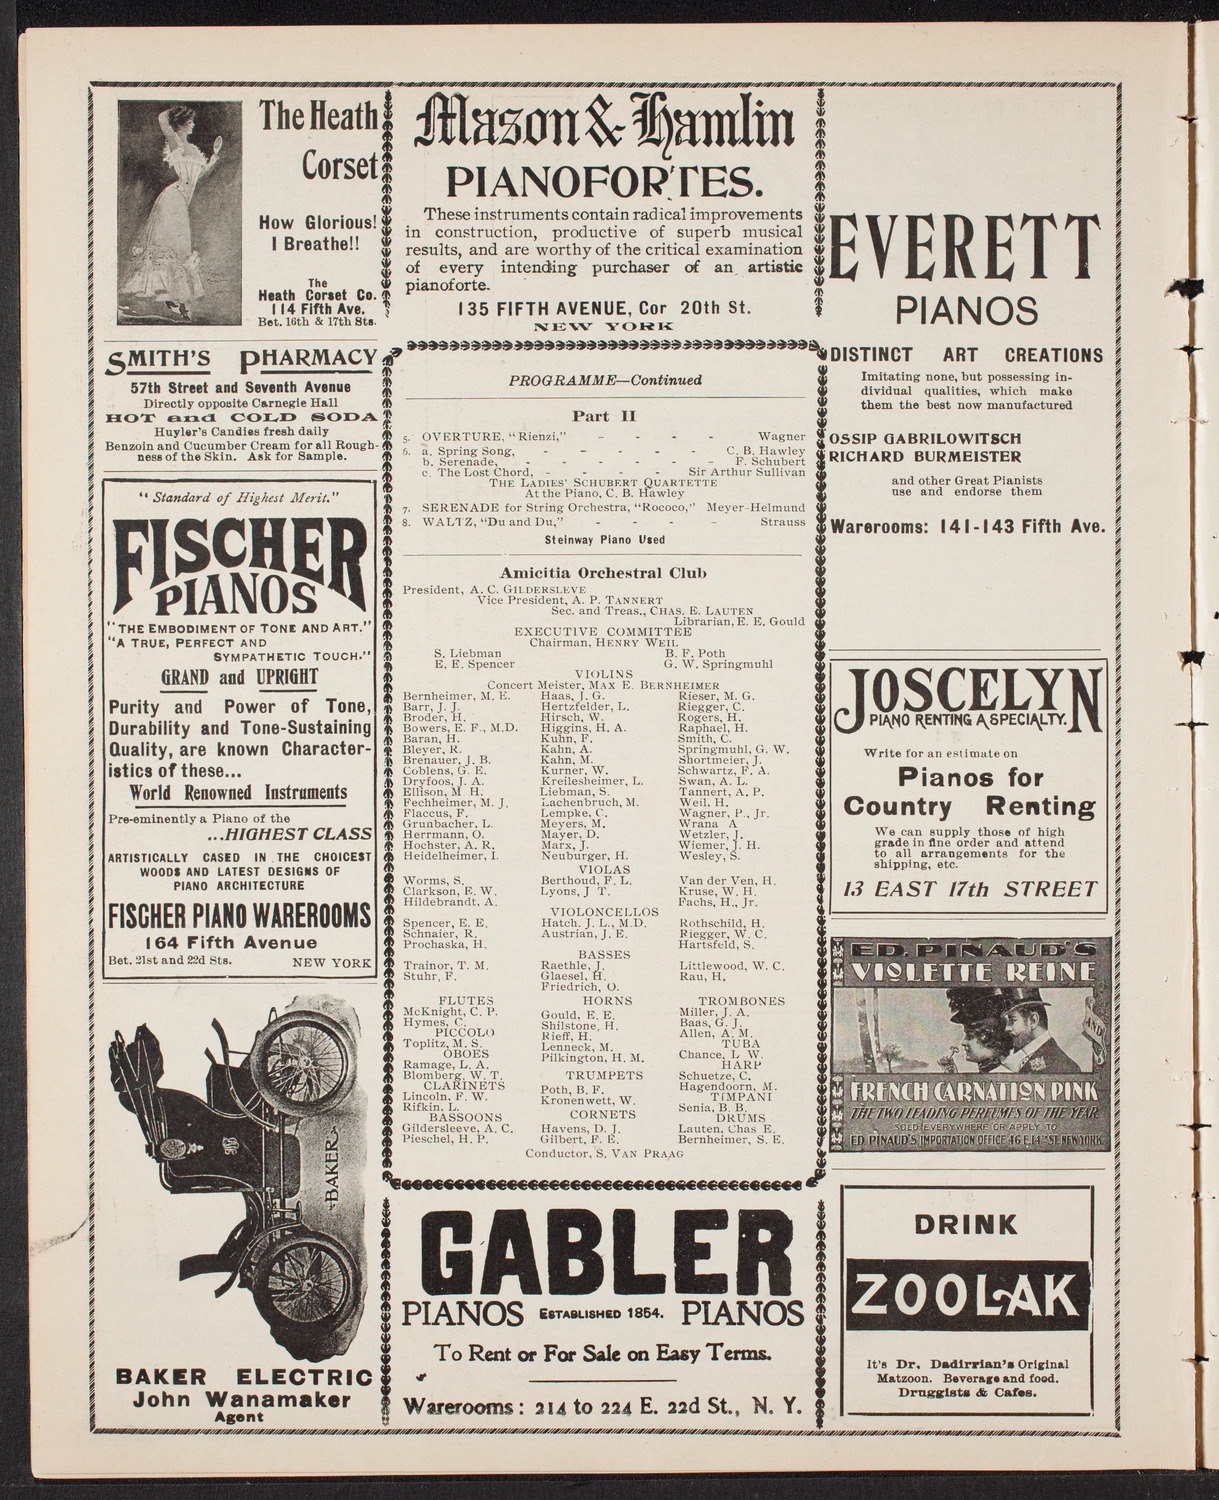 Amicitia Orchestral Club, May 9, 1902, program page 8